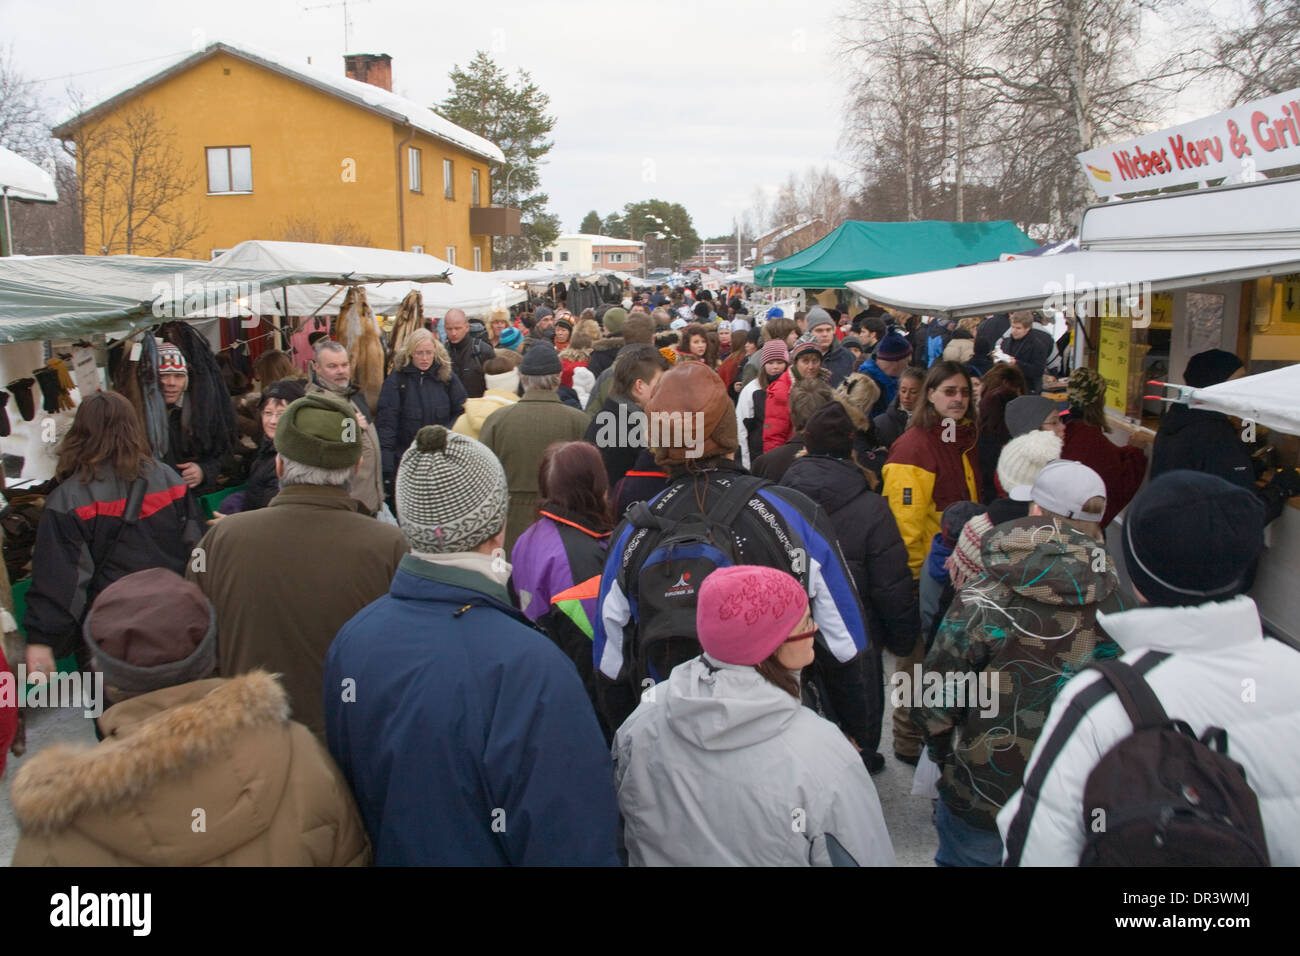 Street with Market booth Jokkmokk fair Laponia Sweden Winter Stock Photo